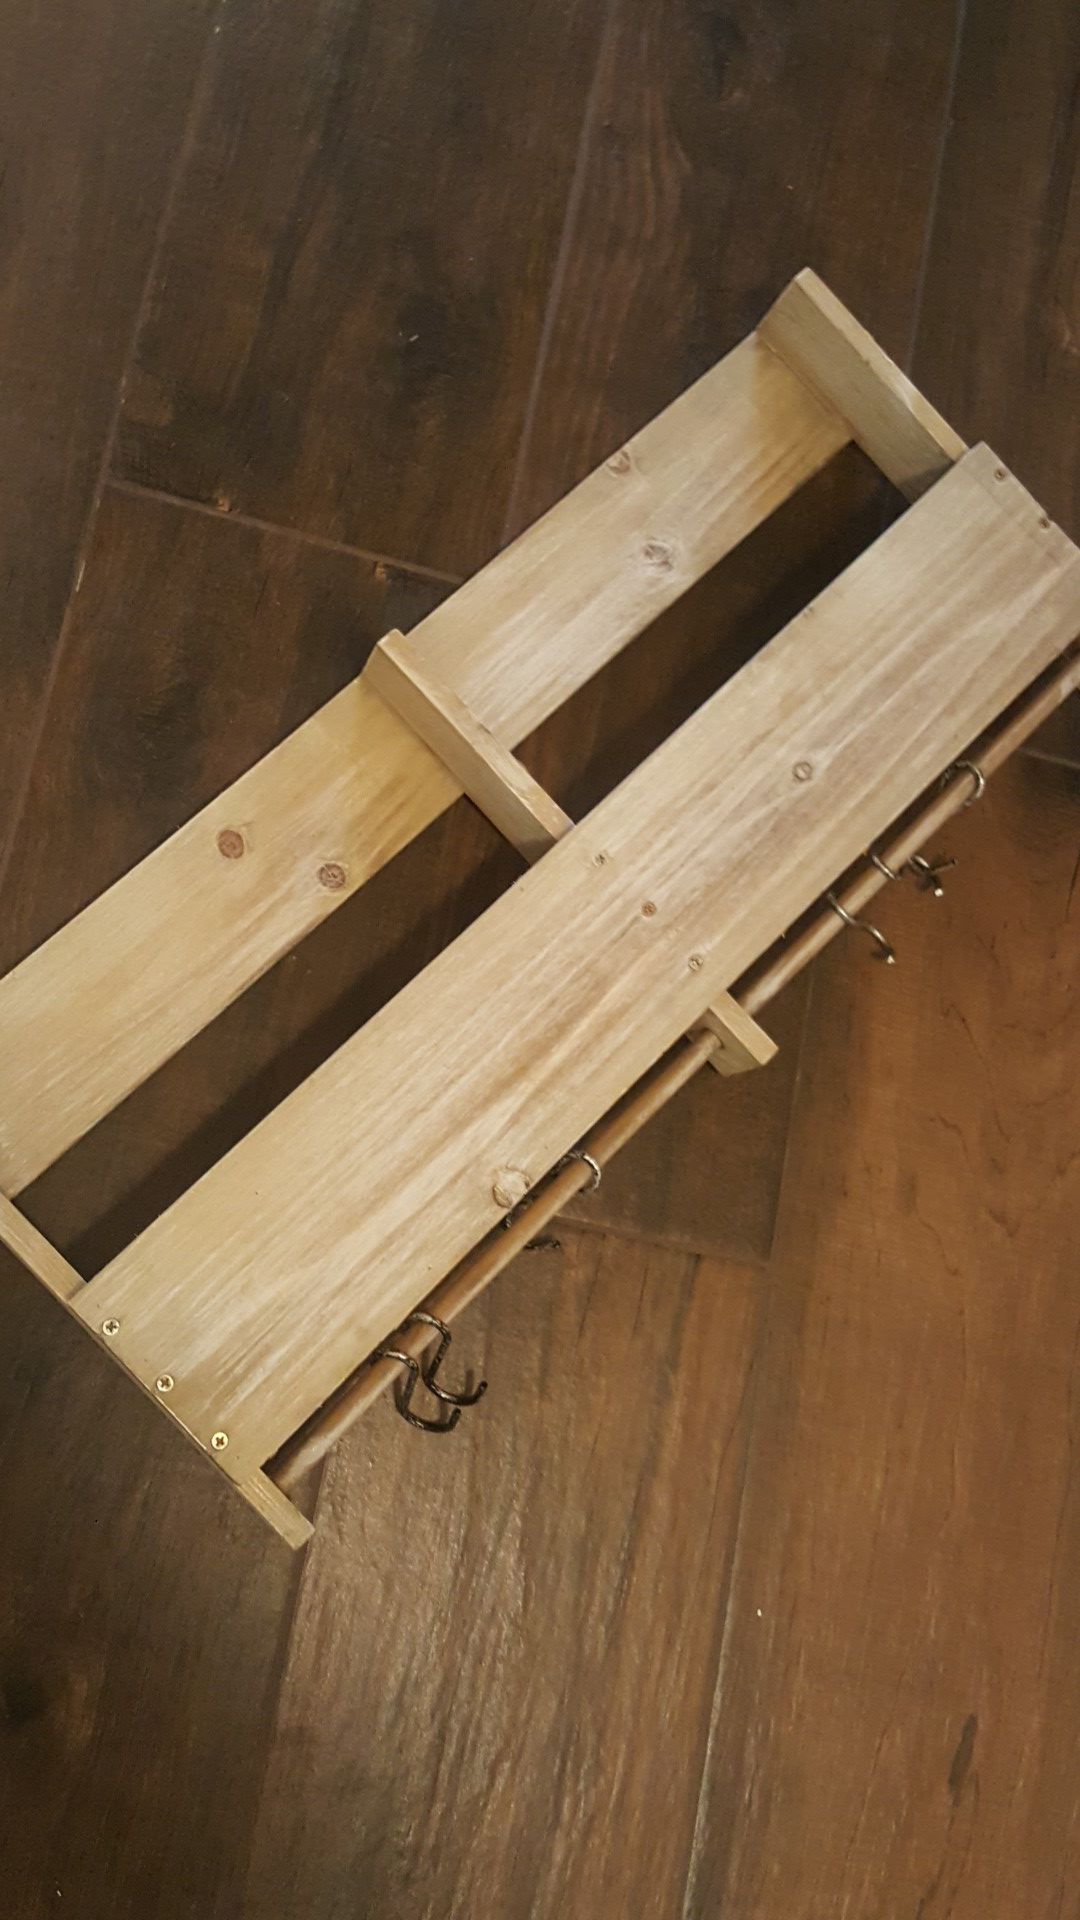 Wood mail / magazine rack with hooks